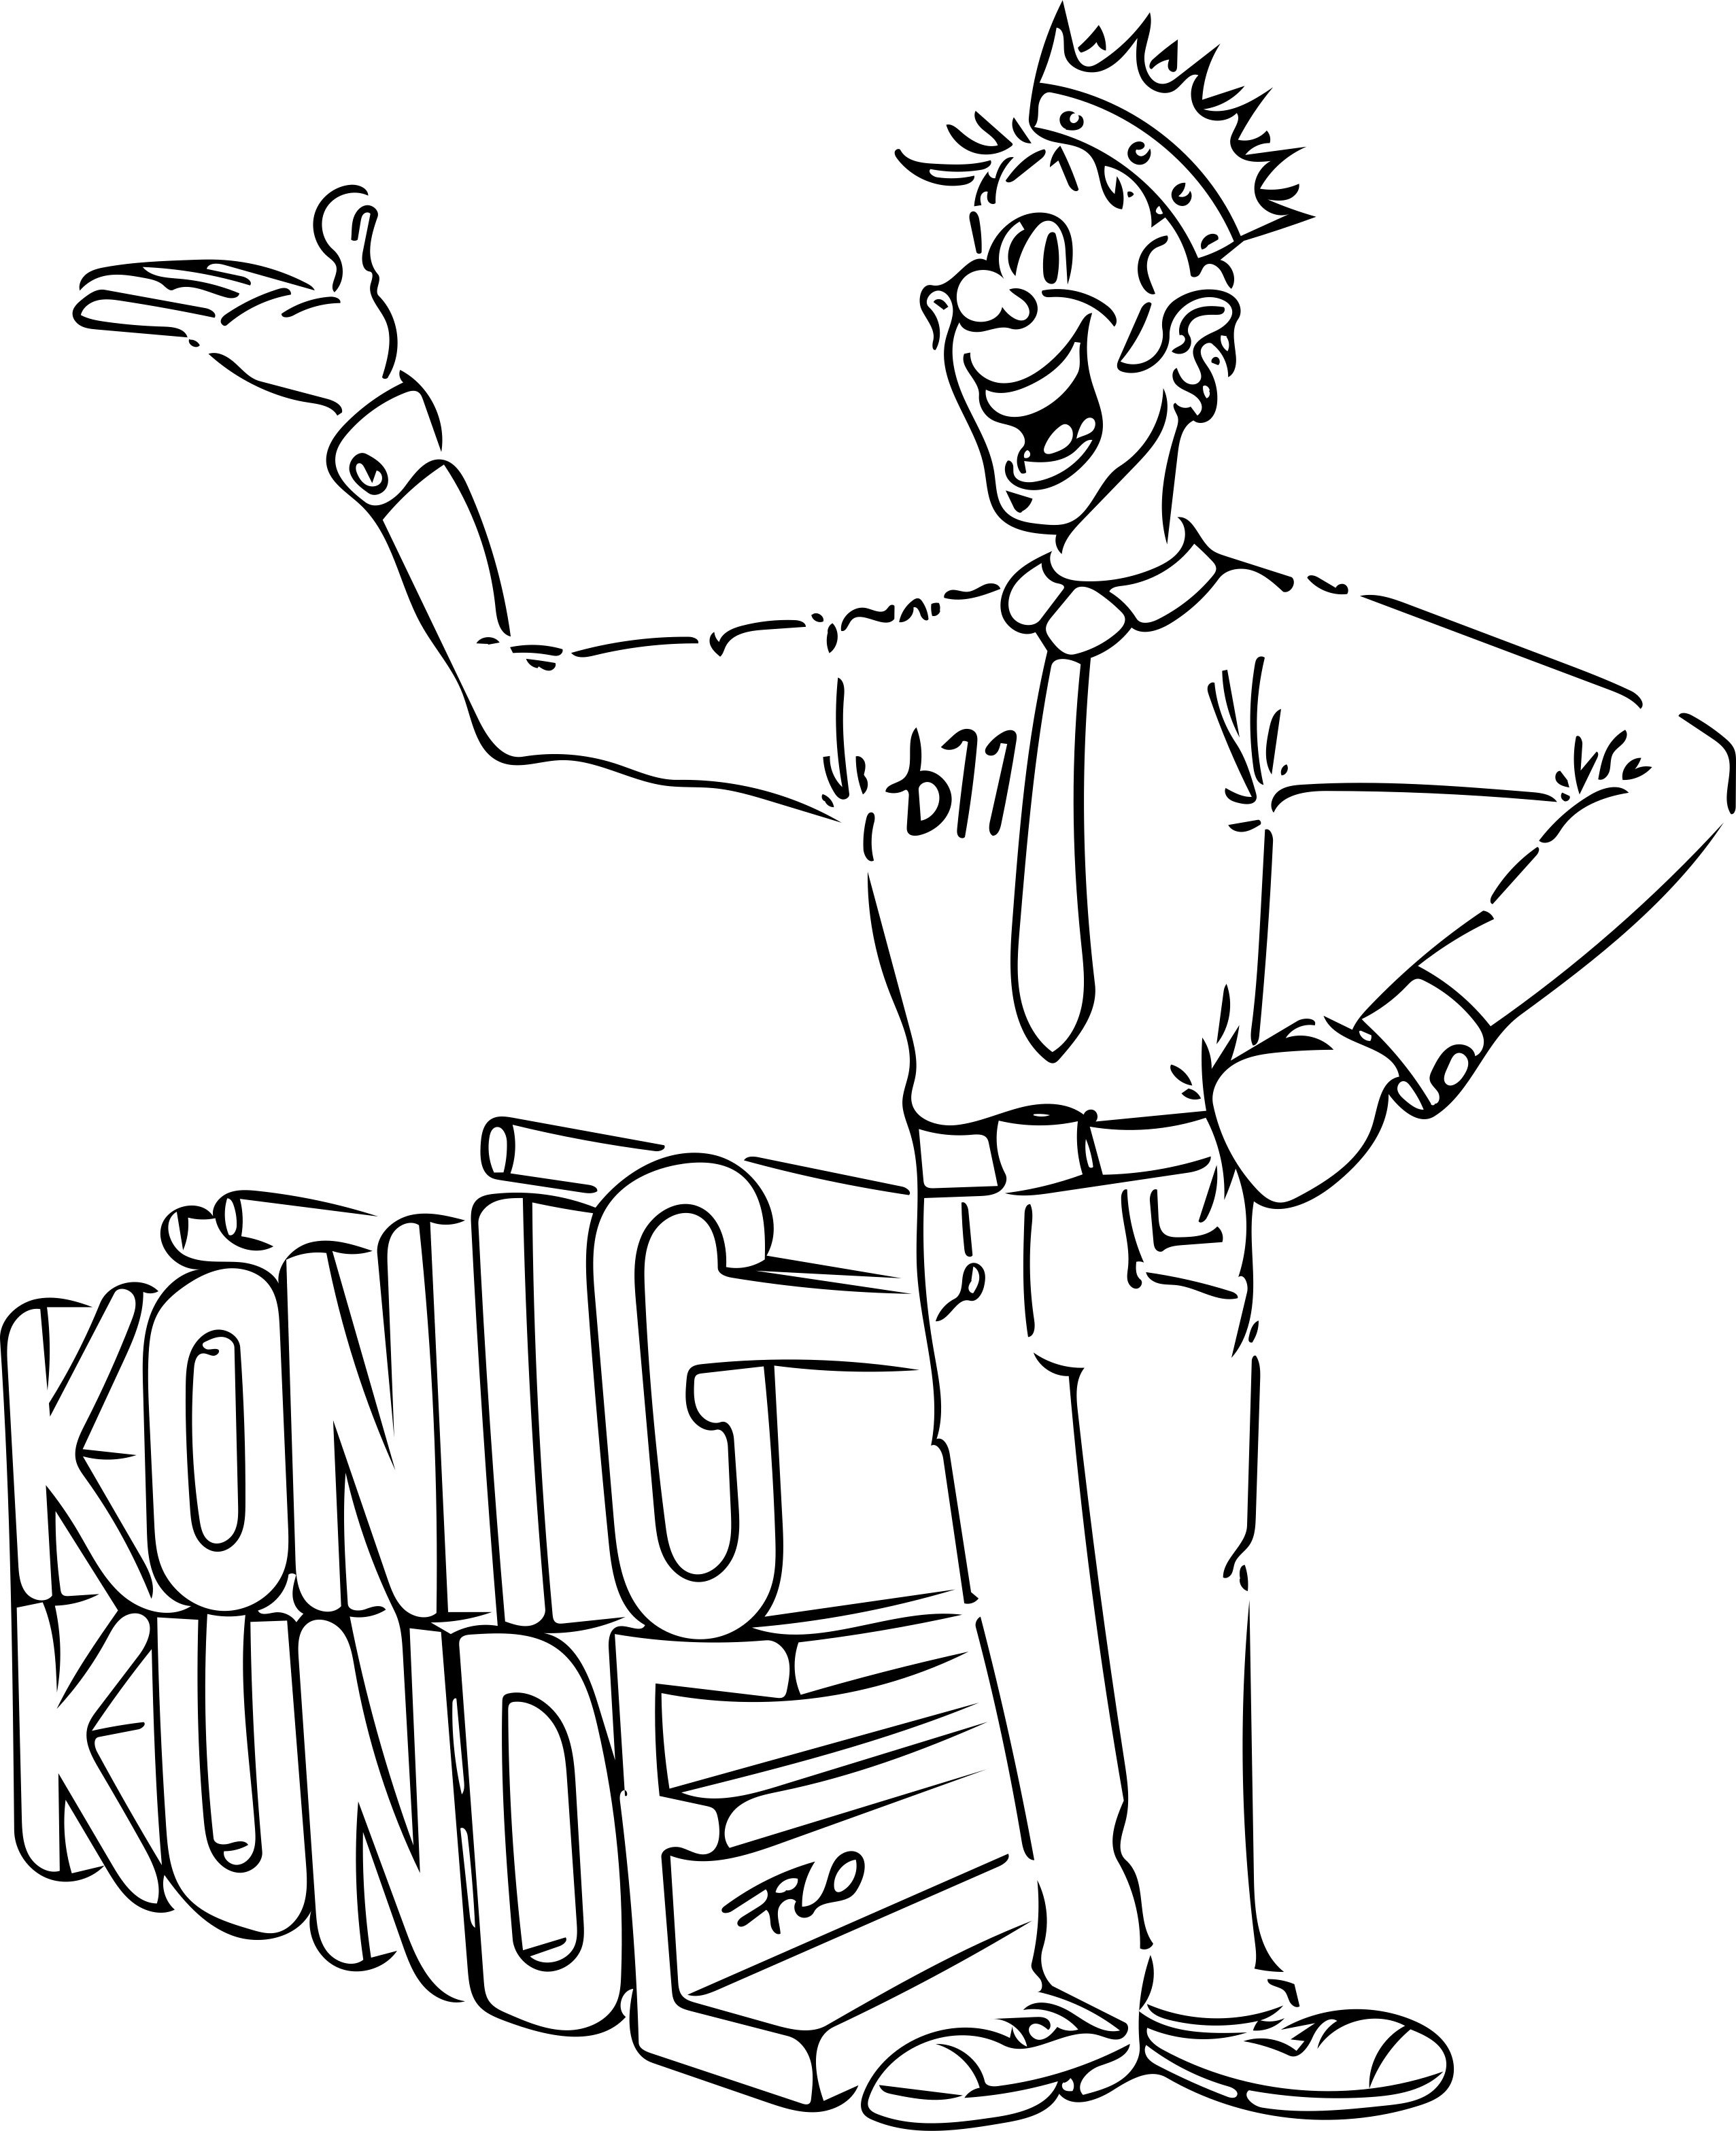 König Kunde - Service & Qualität